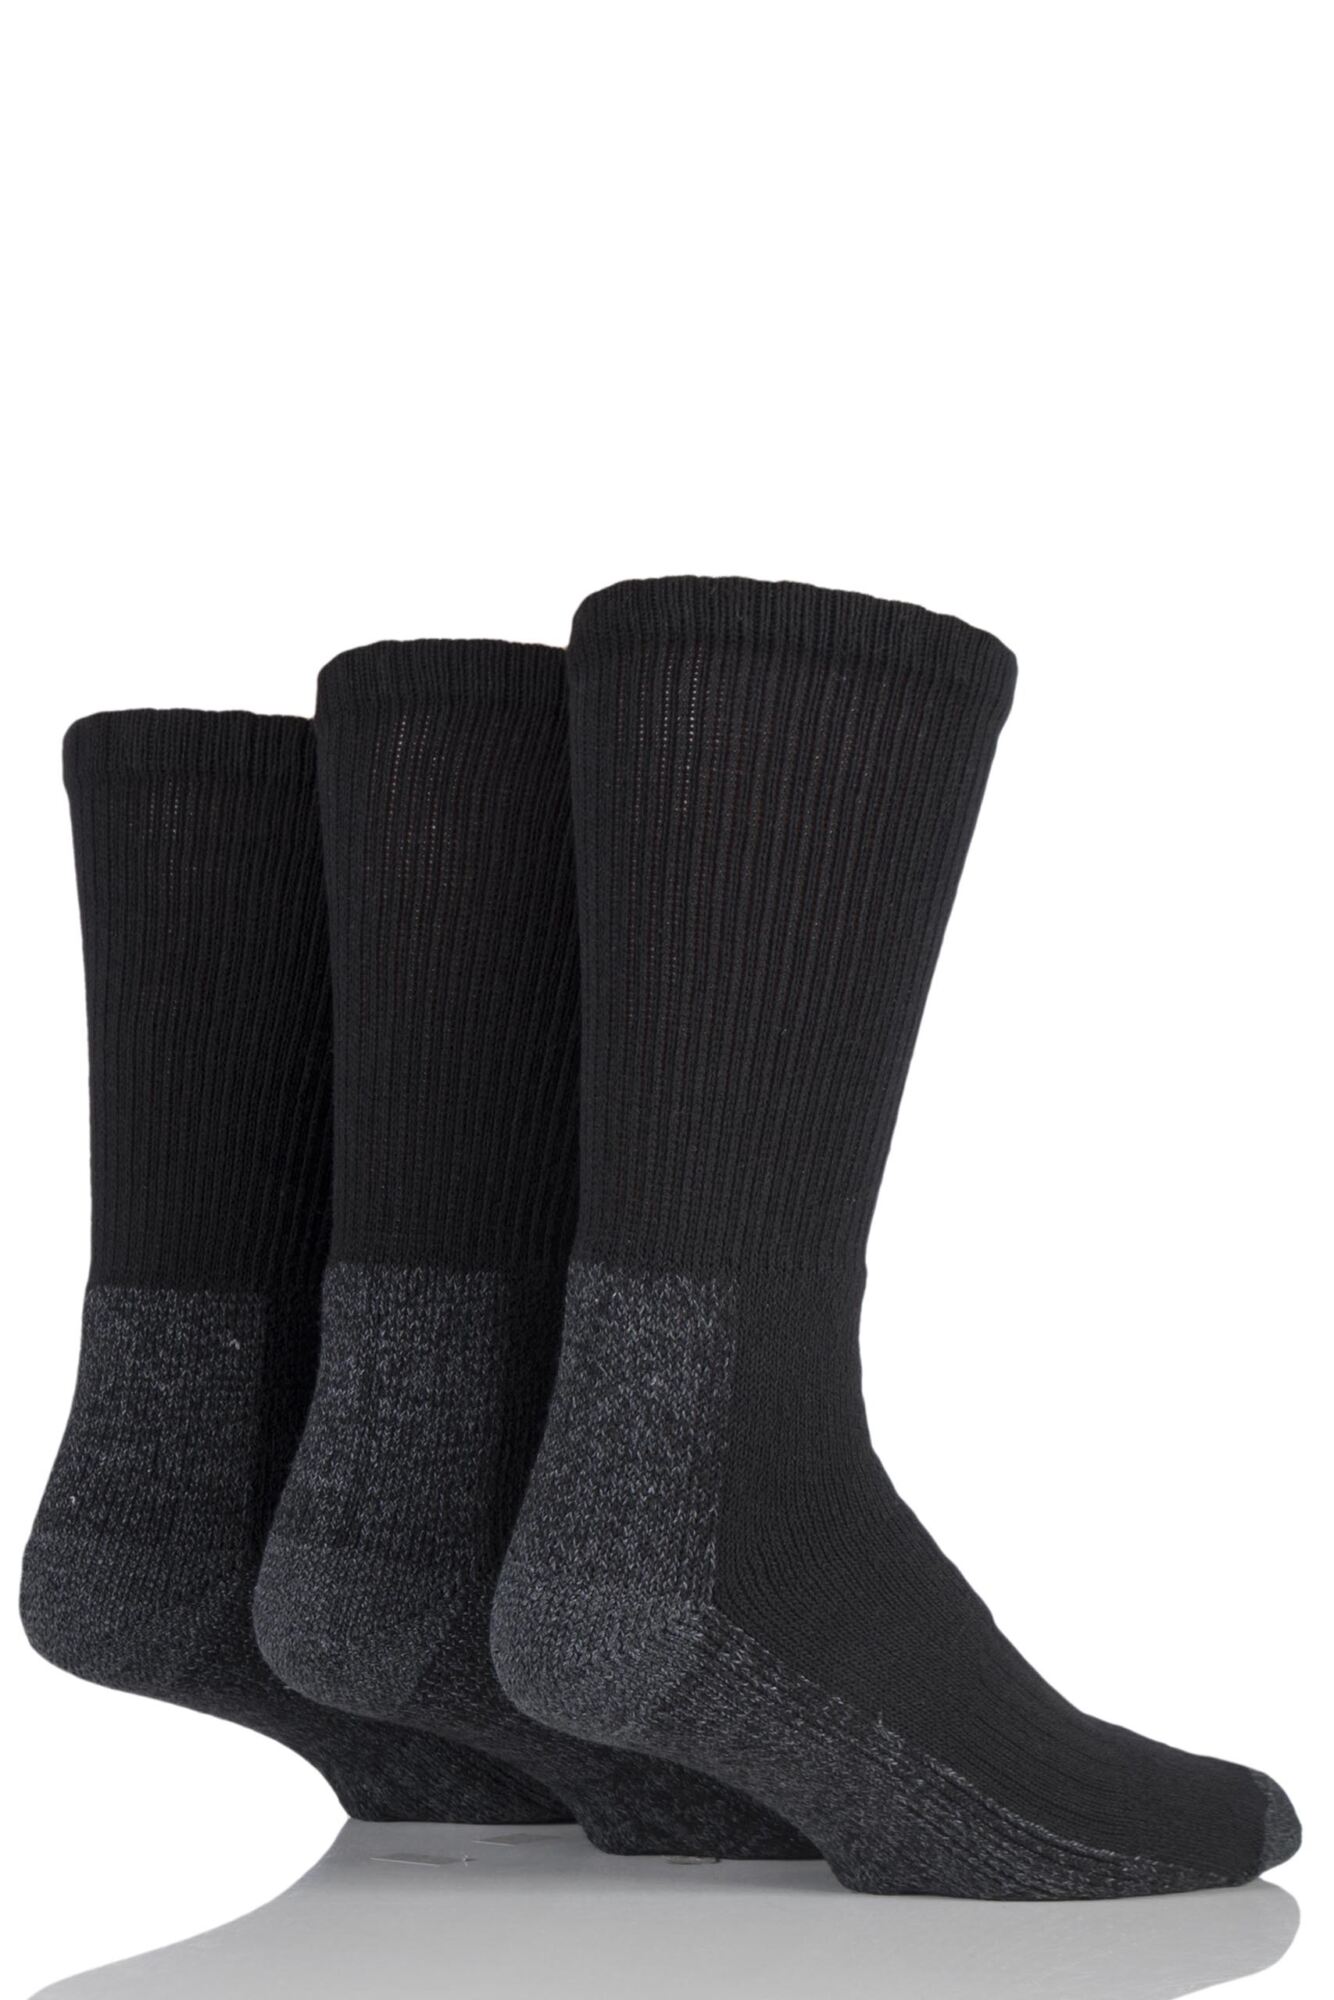 3 Pair Safety Boot Socks Men's - Workforce